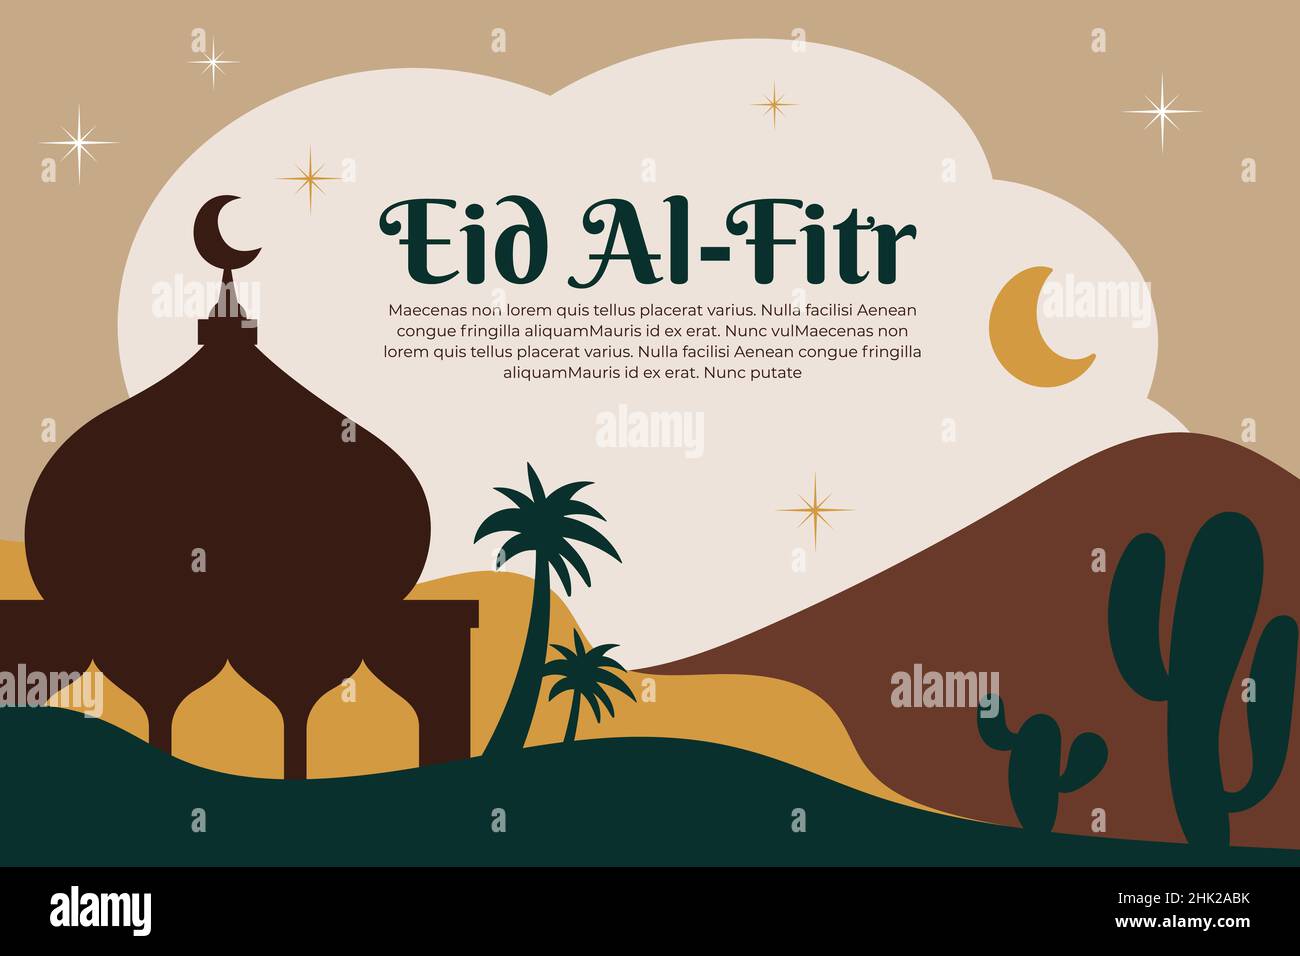 Eid al-fitr or eid mubarak greeting card with Earth tone abstract ...